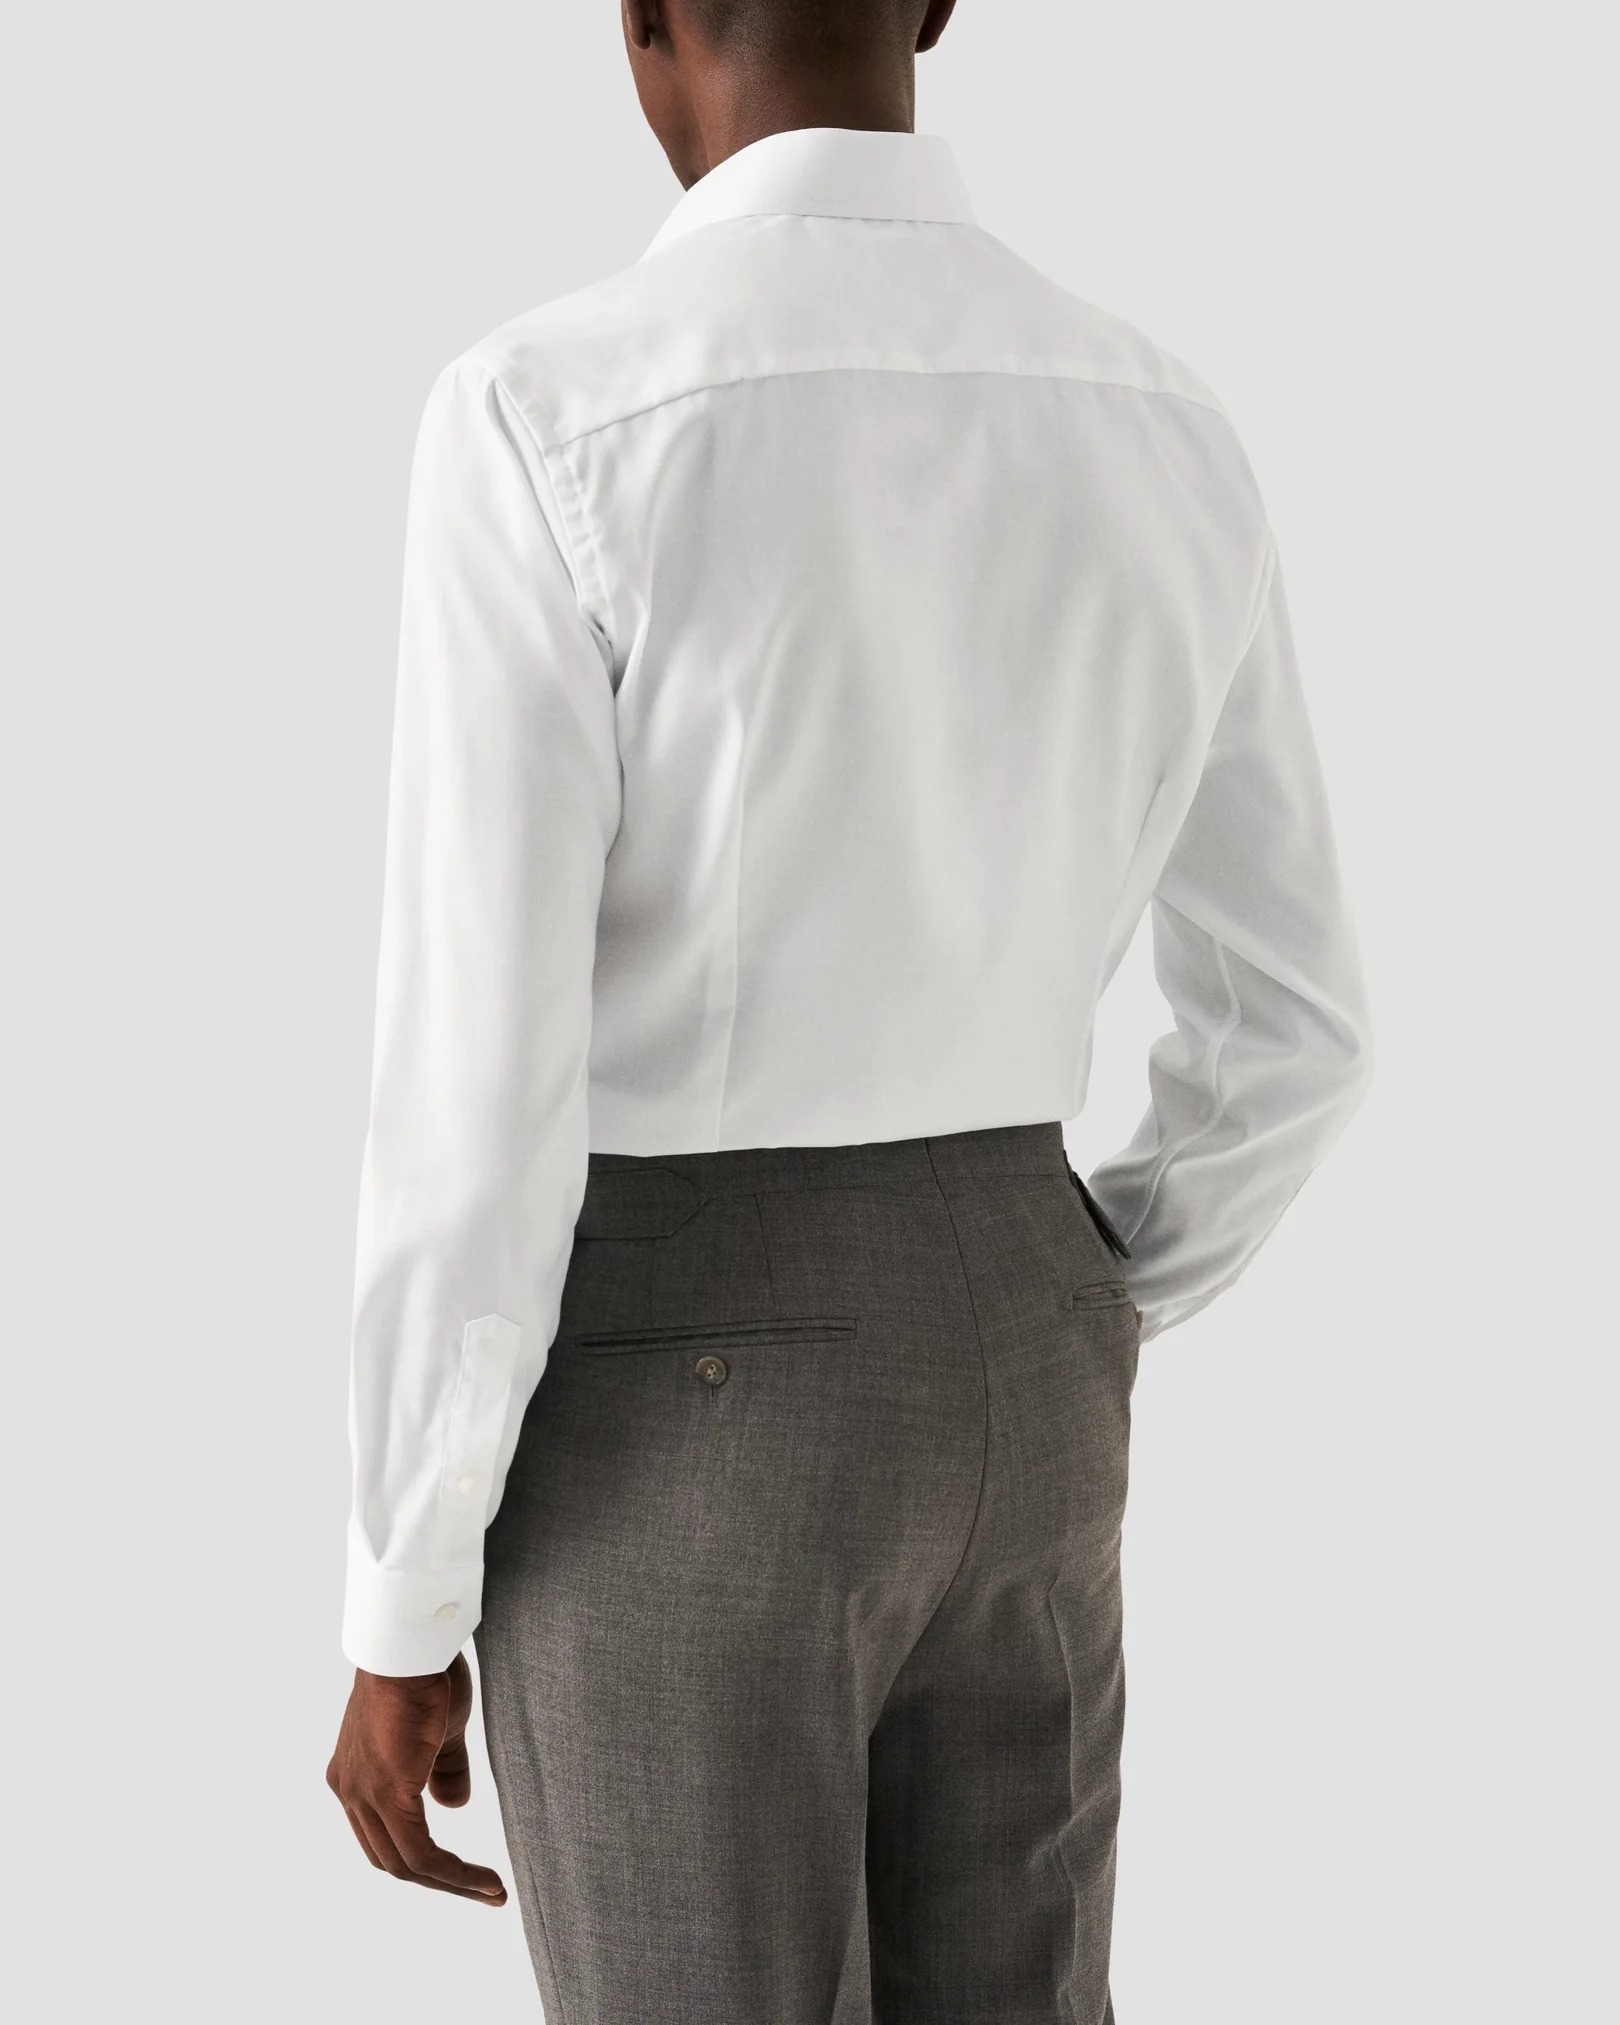 Eton - white wrinkle free twill shirt